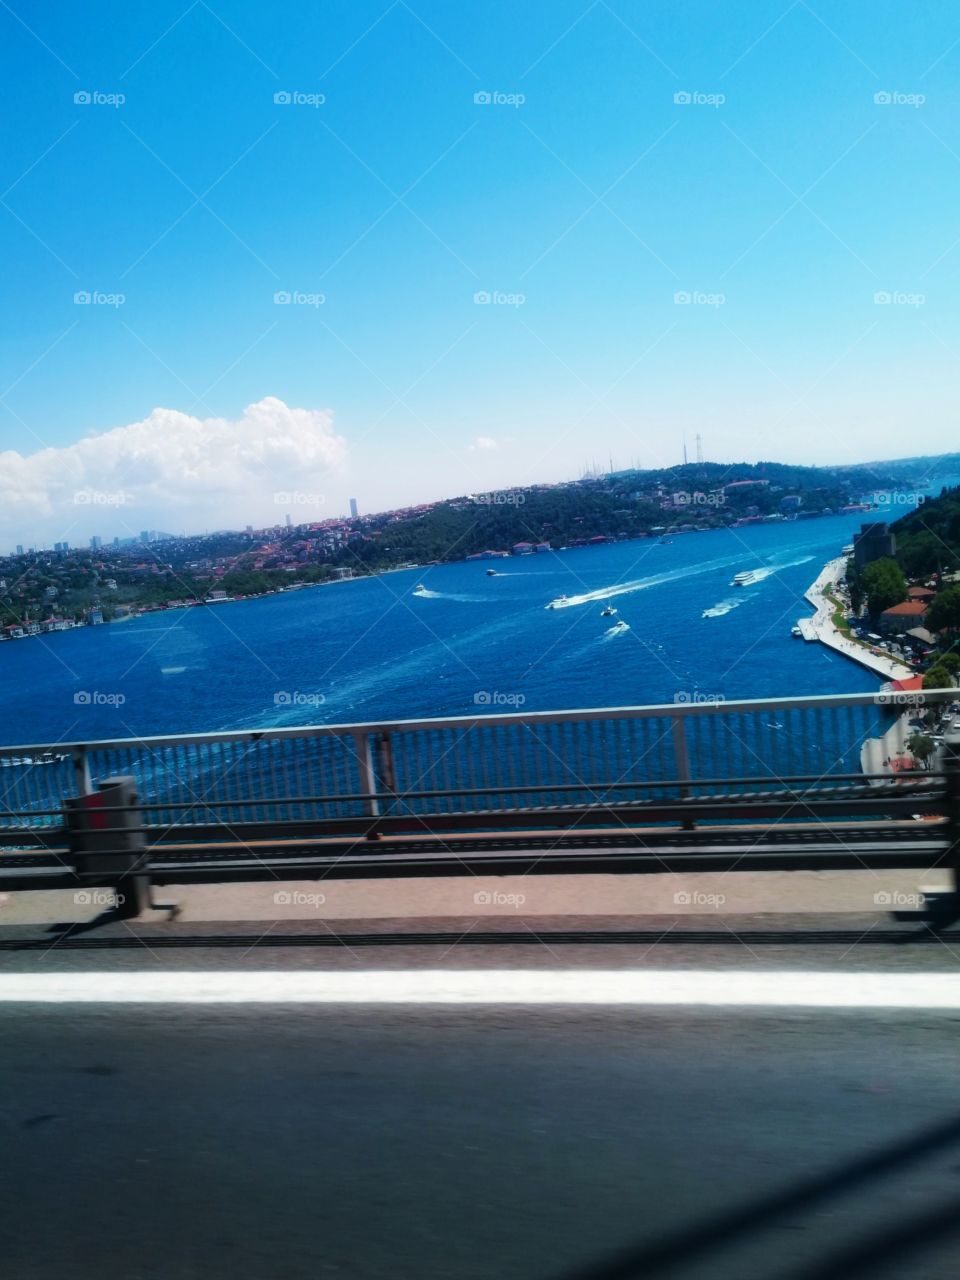 İstanbul FSM Bridge